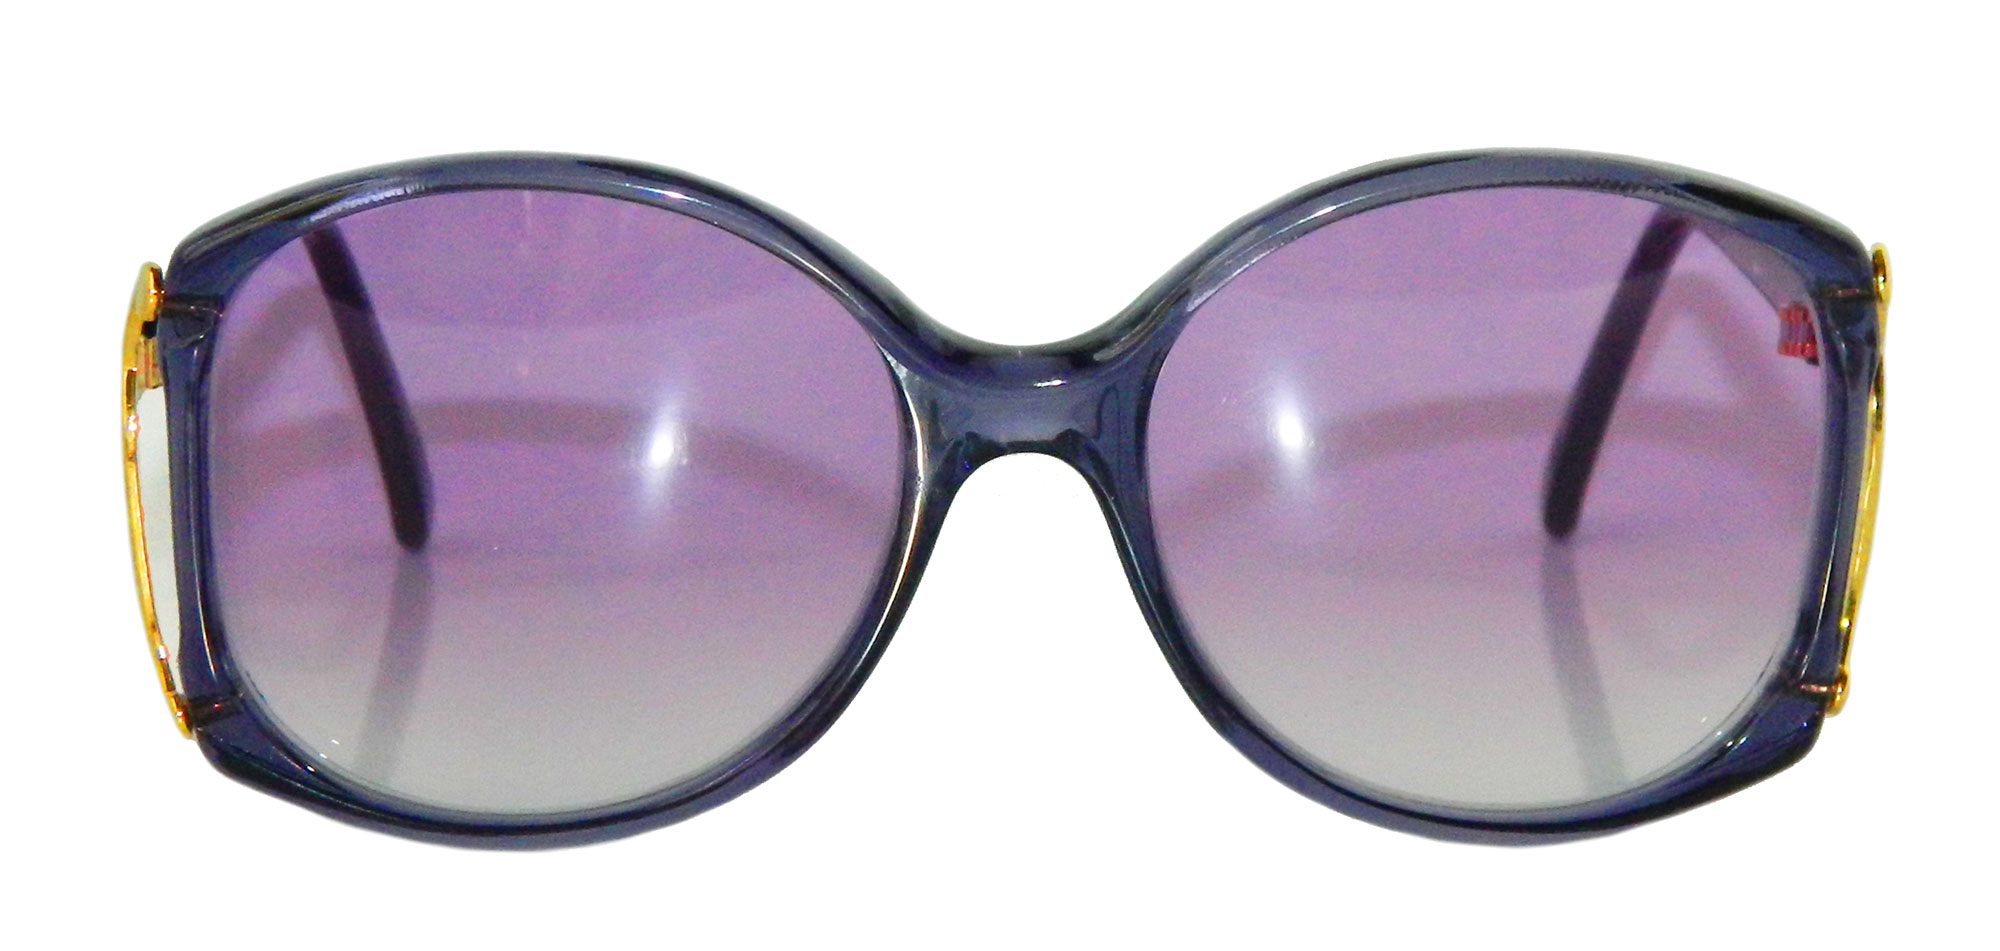 1980s purple sunglasses